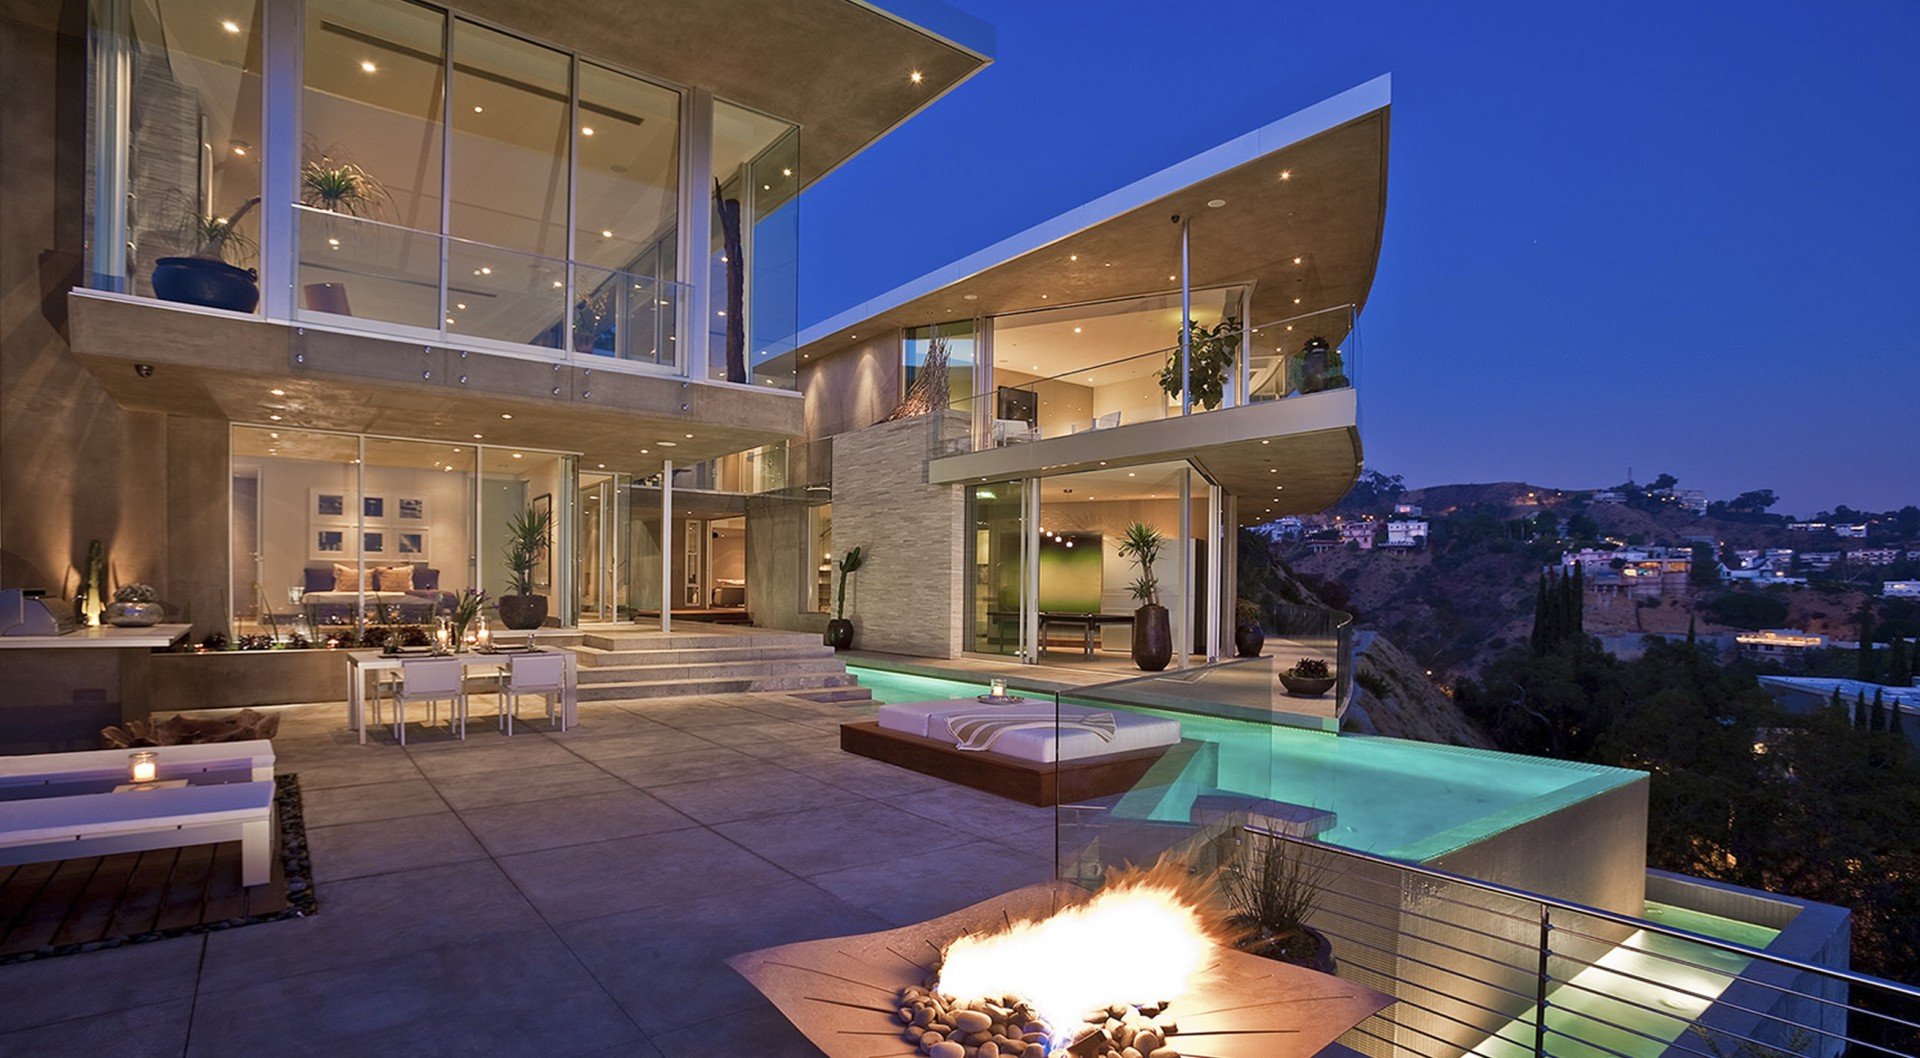 Avicii Buys A $15.5 Million Hollywood Hills Mansion ...